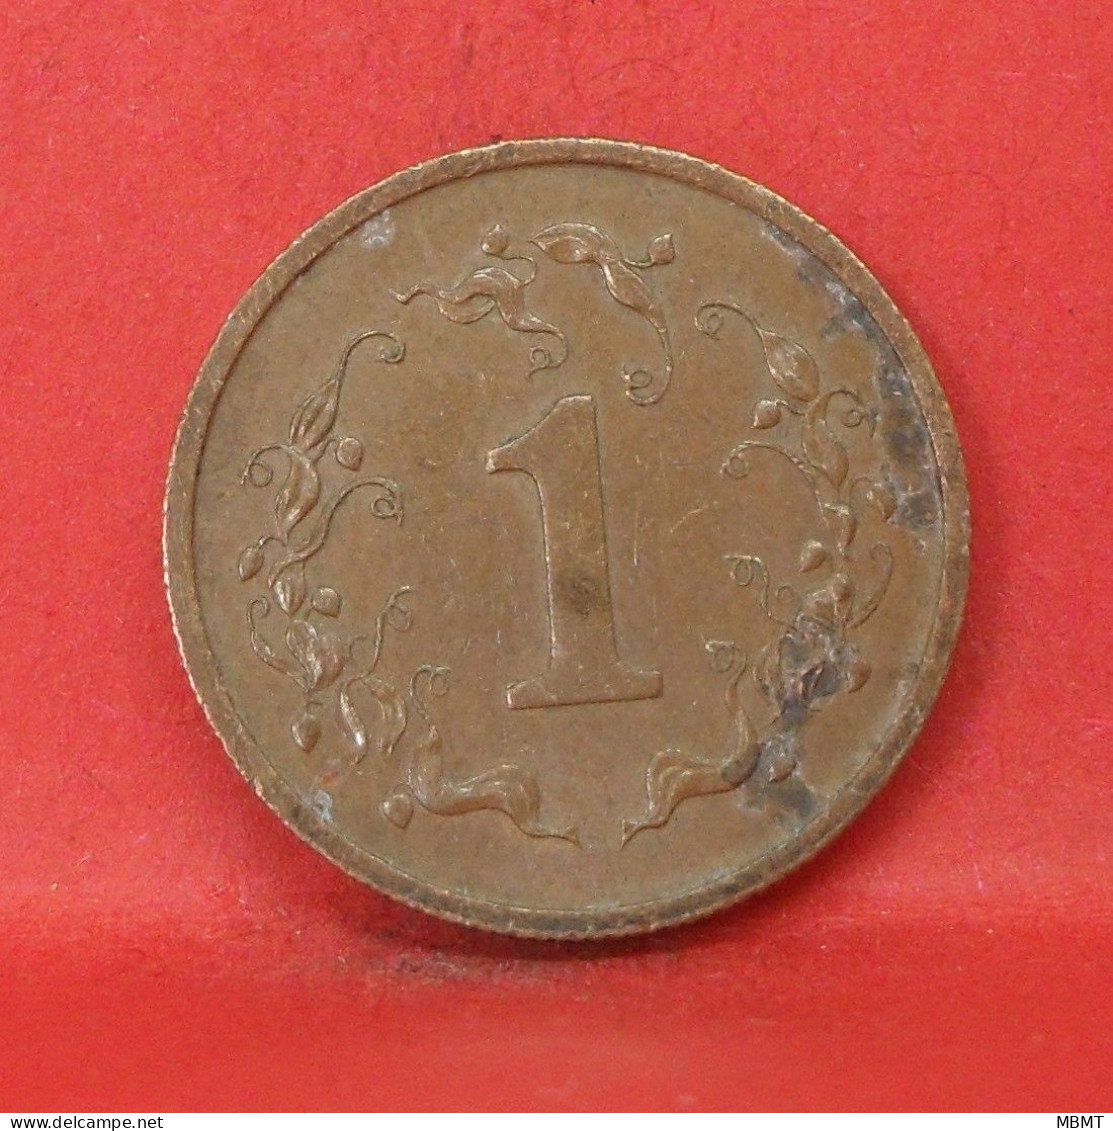 1 Cent 1980 - TB - Pièce De Monnaie Zimbabwe - Article N°6241 - Simbabwe